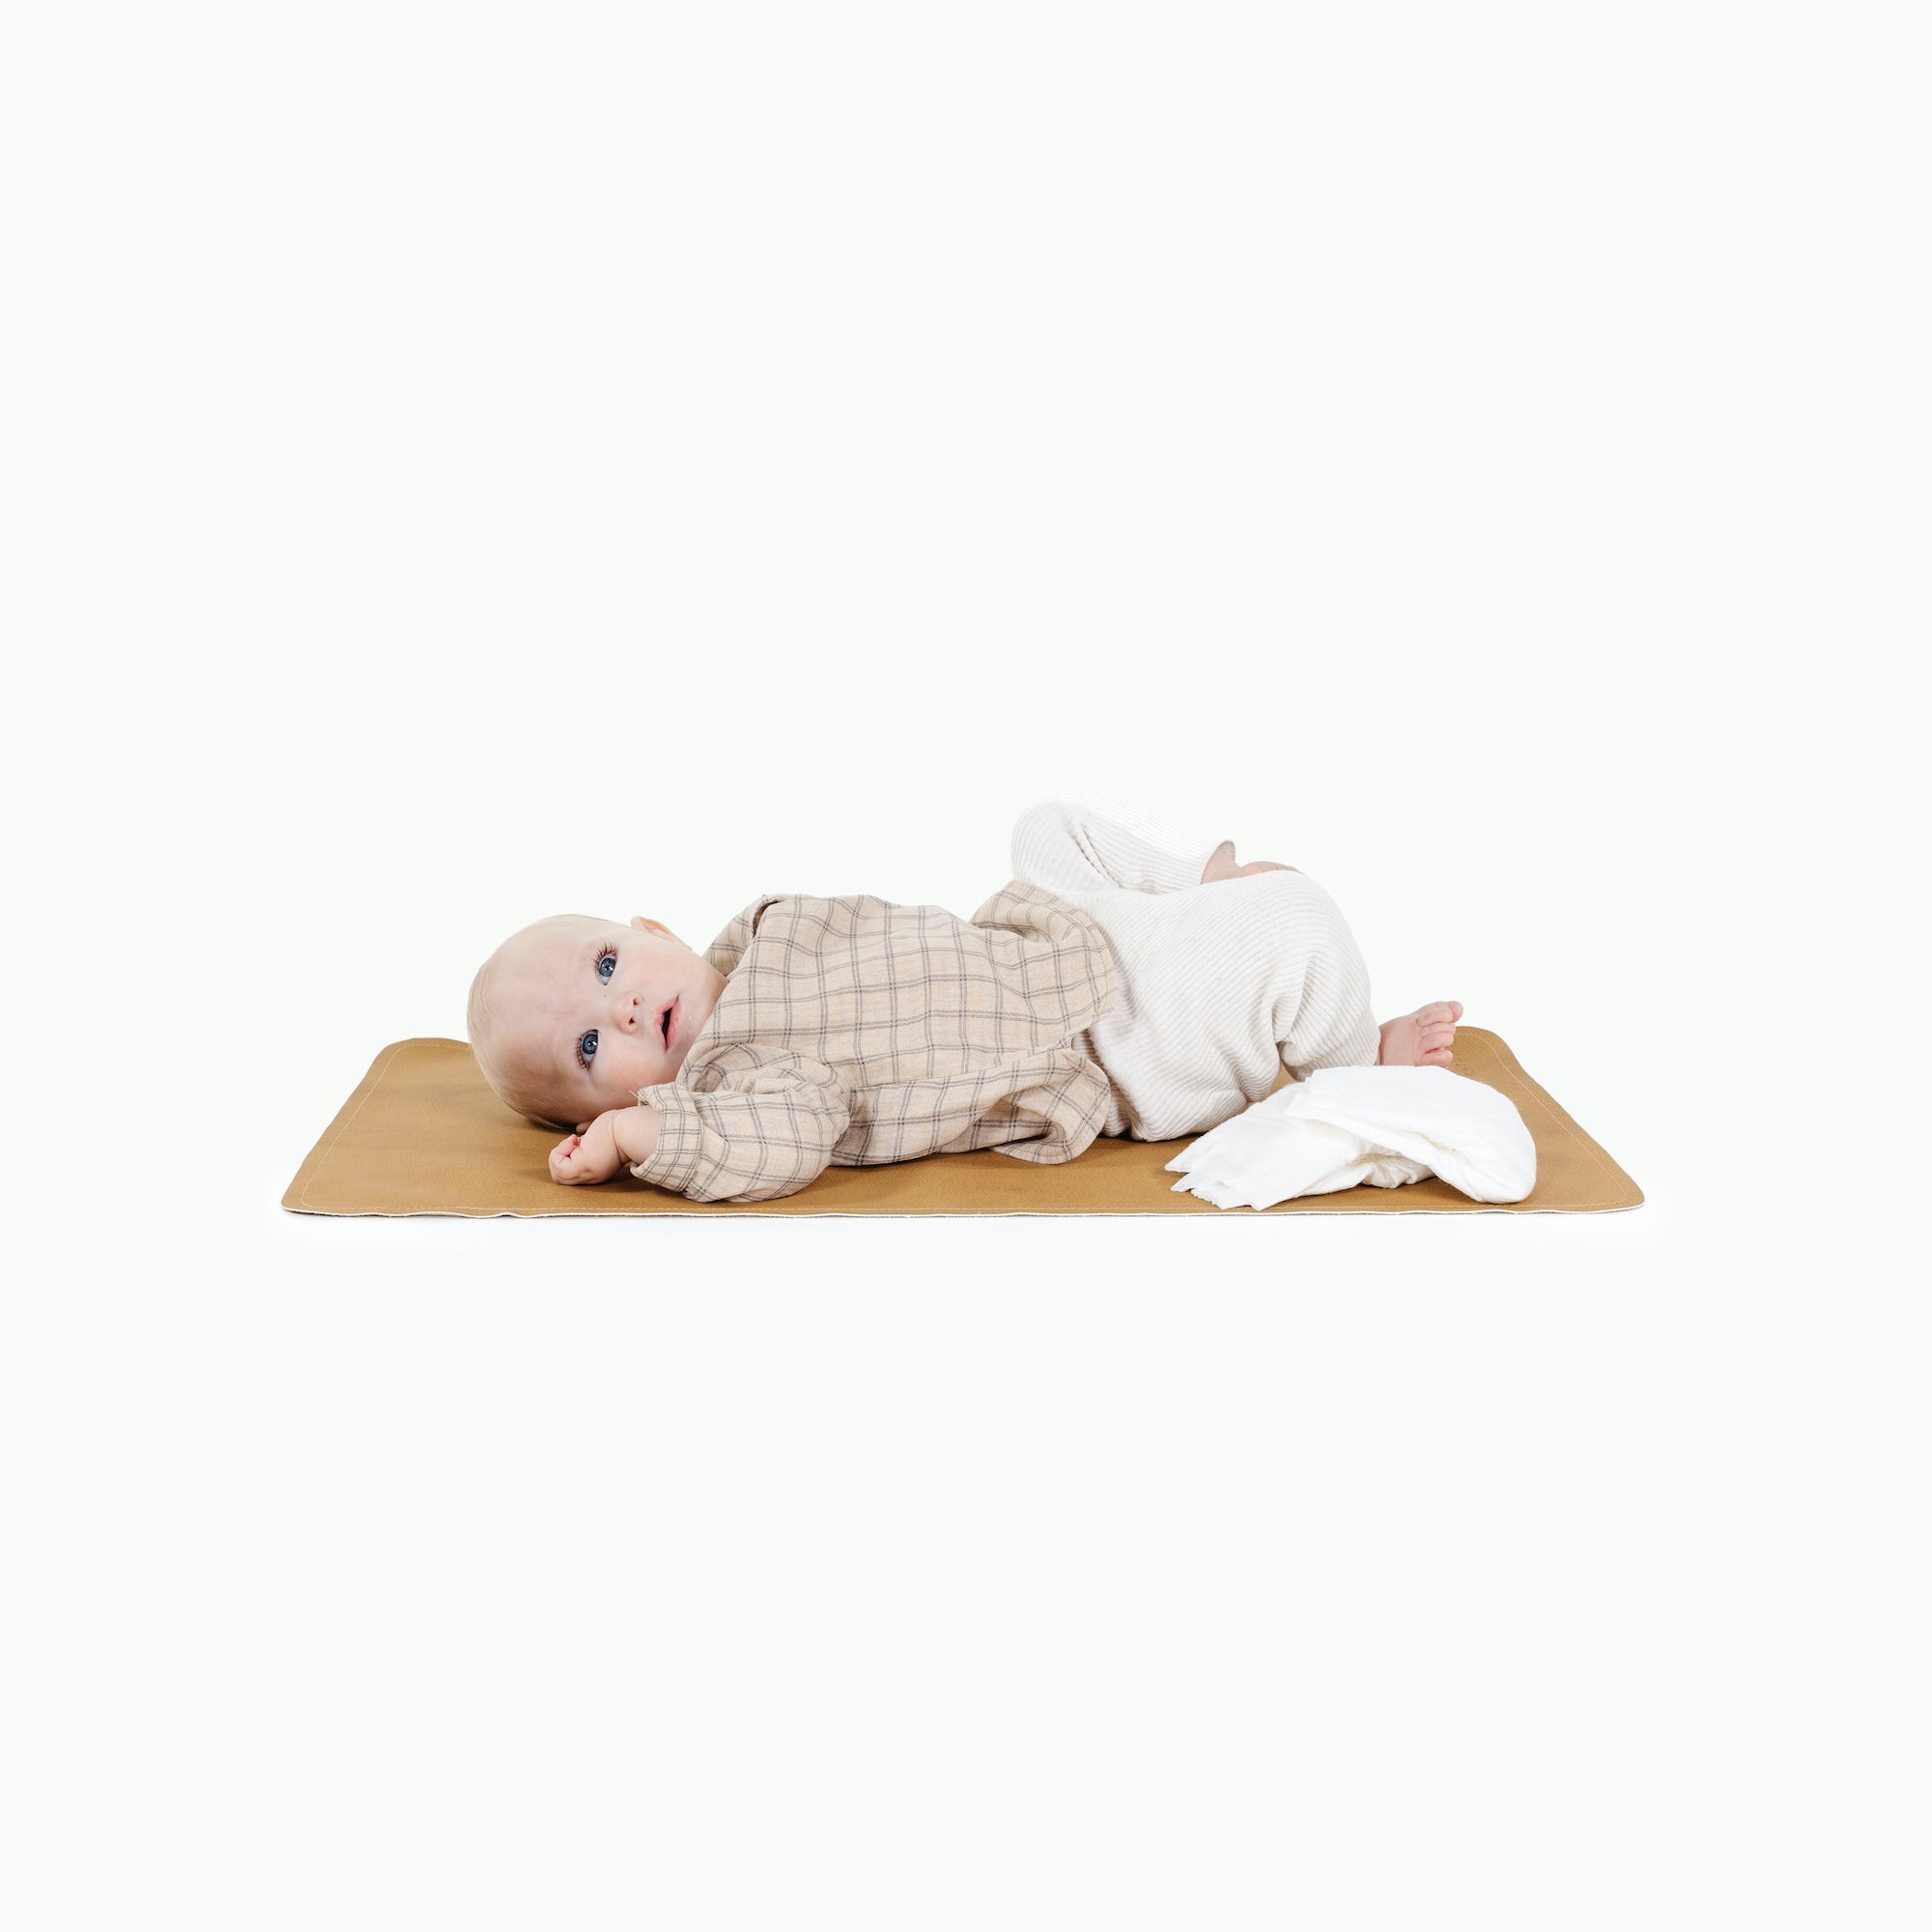 Tassel@baby laying on the tassel micro+ mat